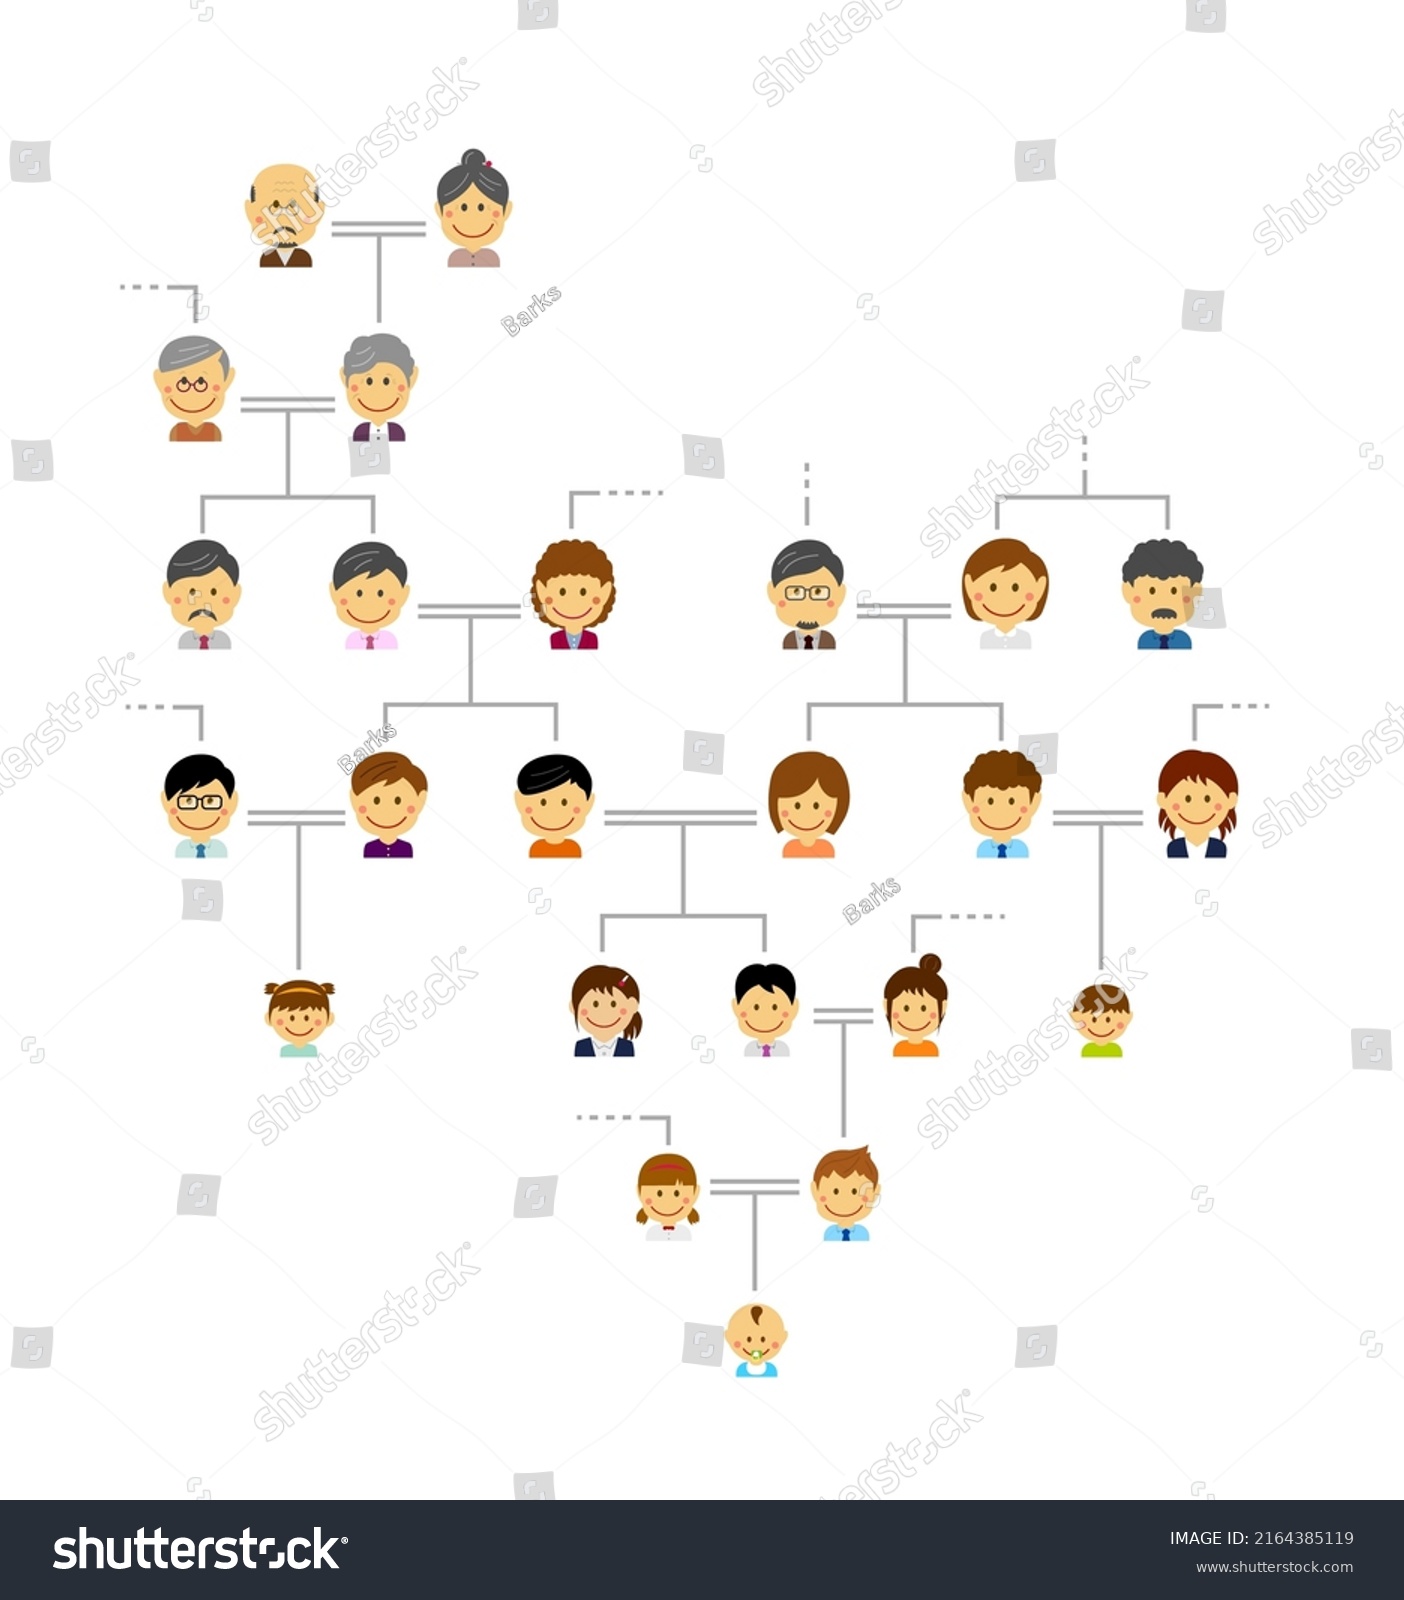 Family Tree Members Family Vector Illustration Stock Vector (Royalty ...